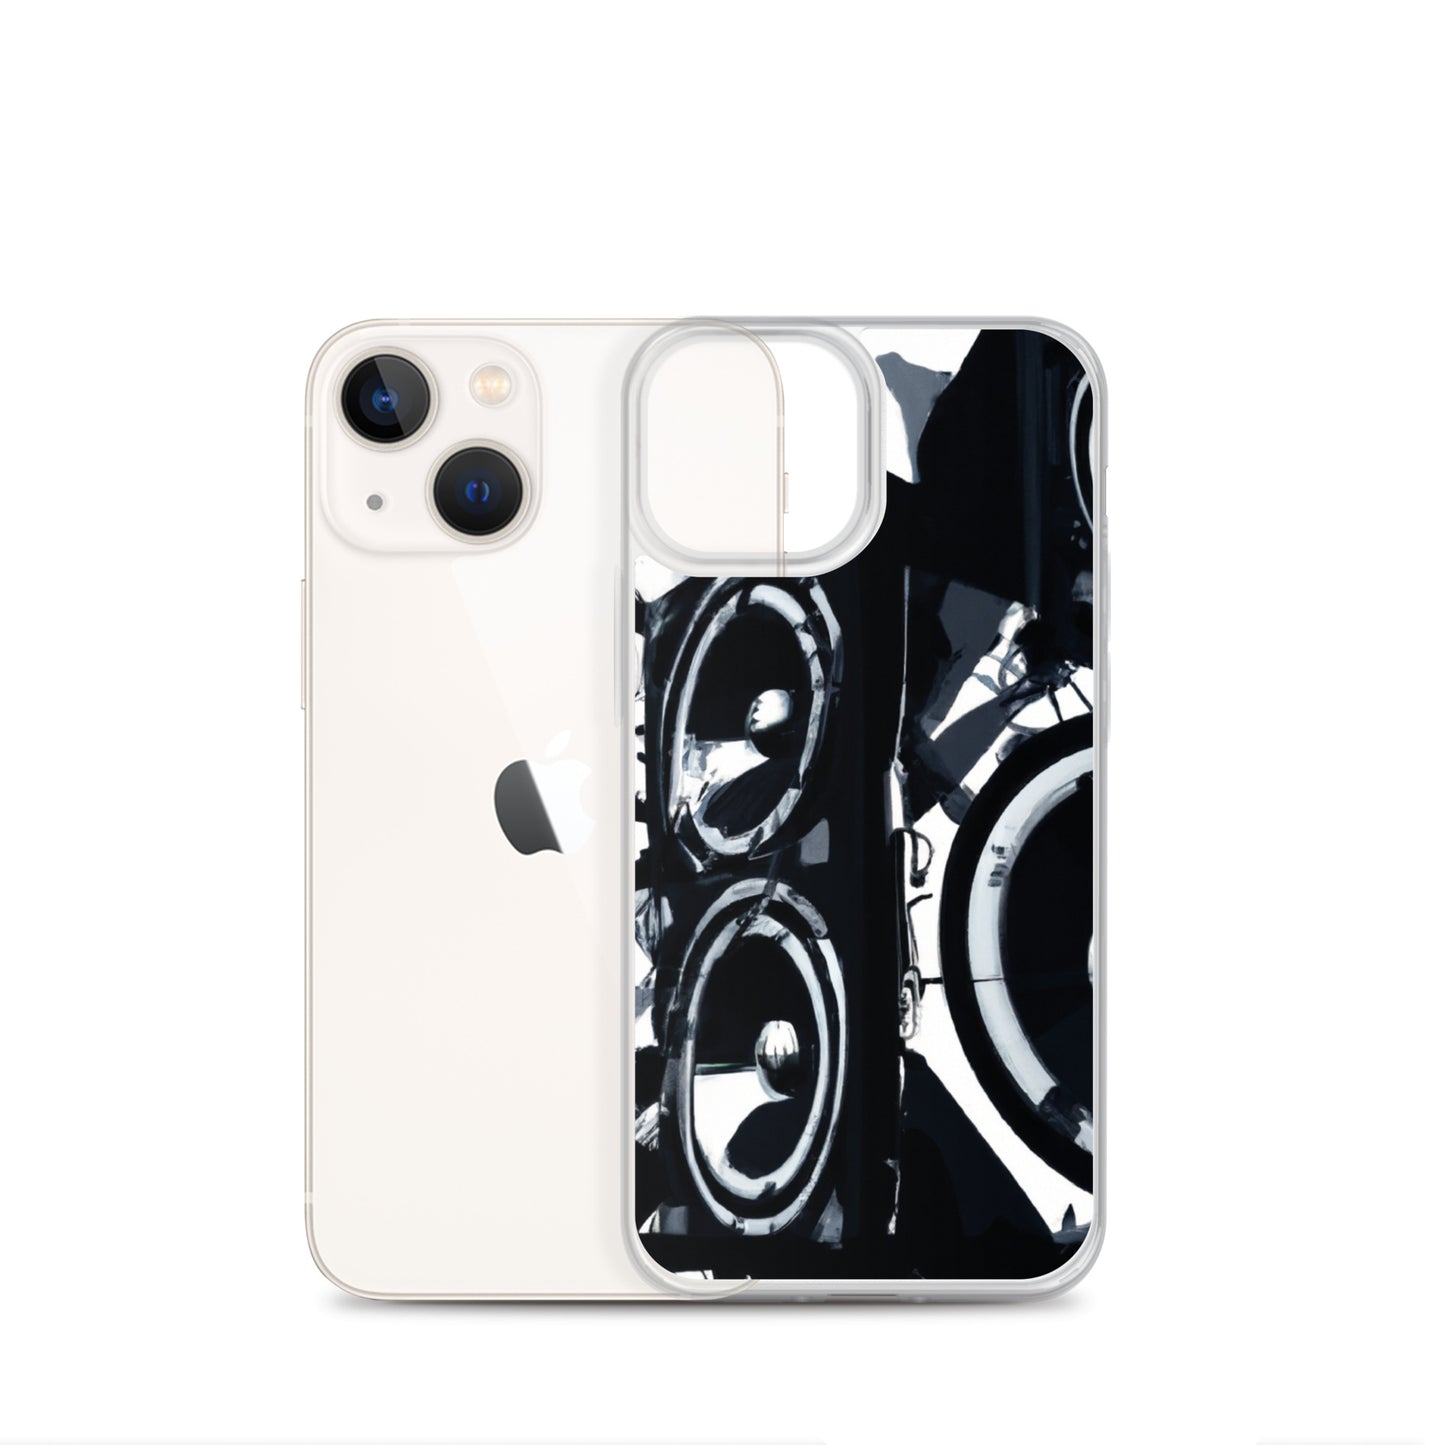 Speaker (v1) Clear Case for iPhone®